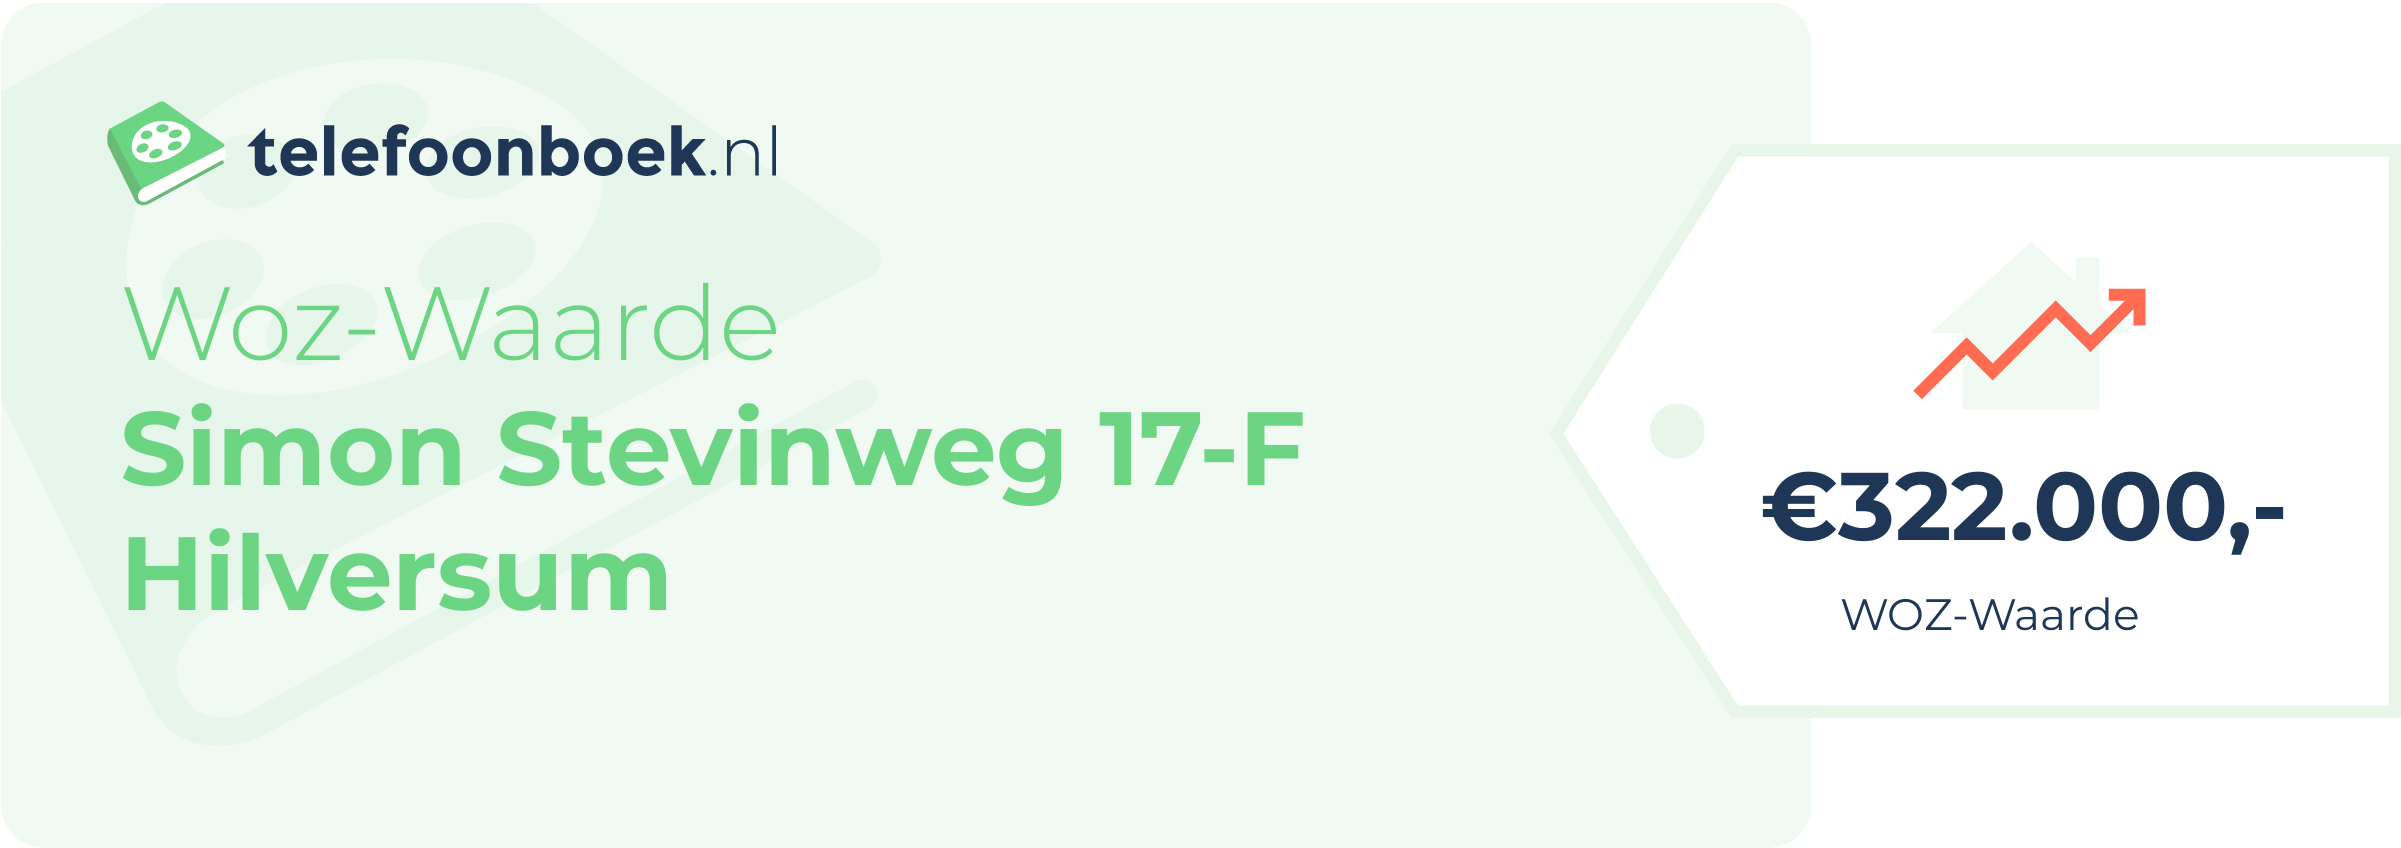 WOZ-waarde Simon Stevinweg 17-F Hilversum